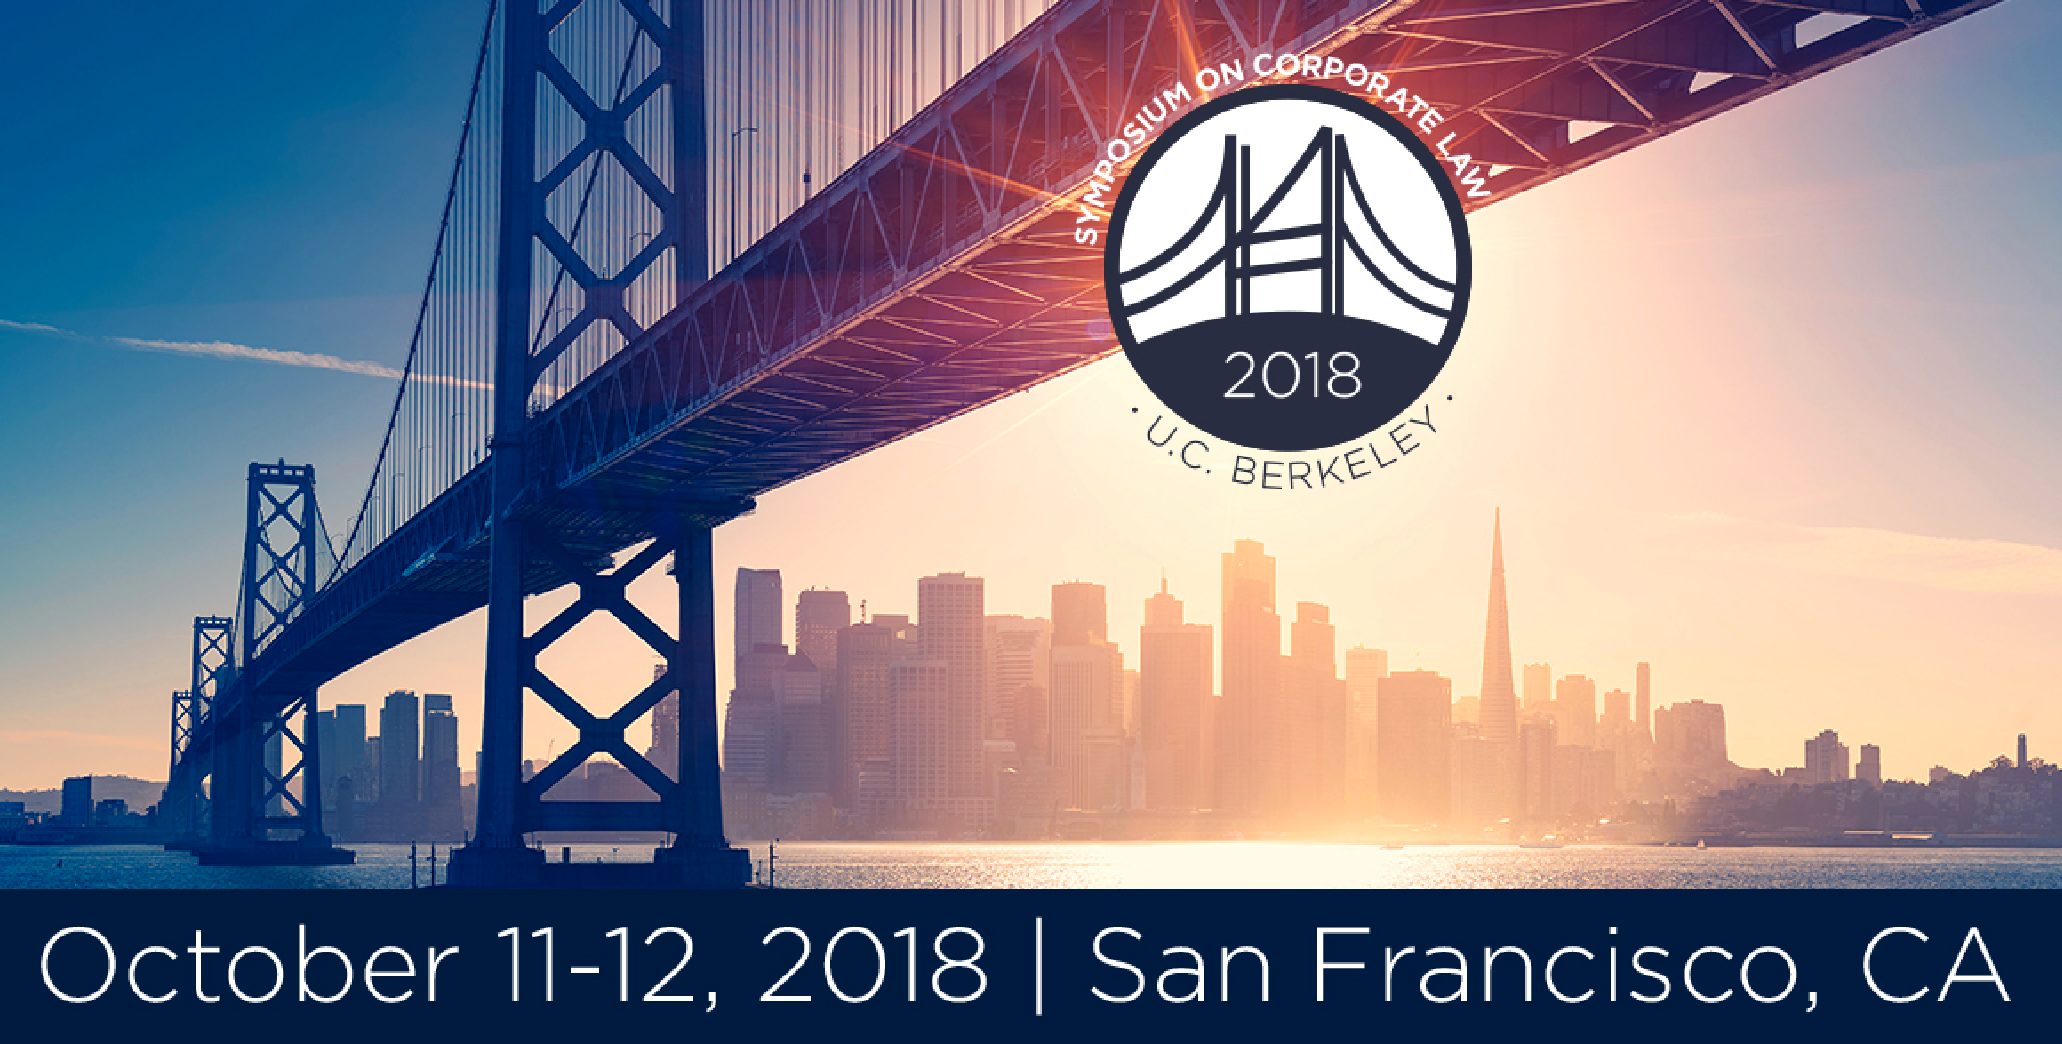 2018 UC Berkeley Symposium on Corporate Law: October 11-12, San Francisco